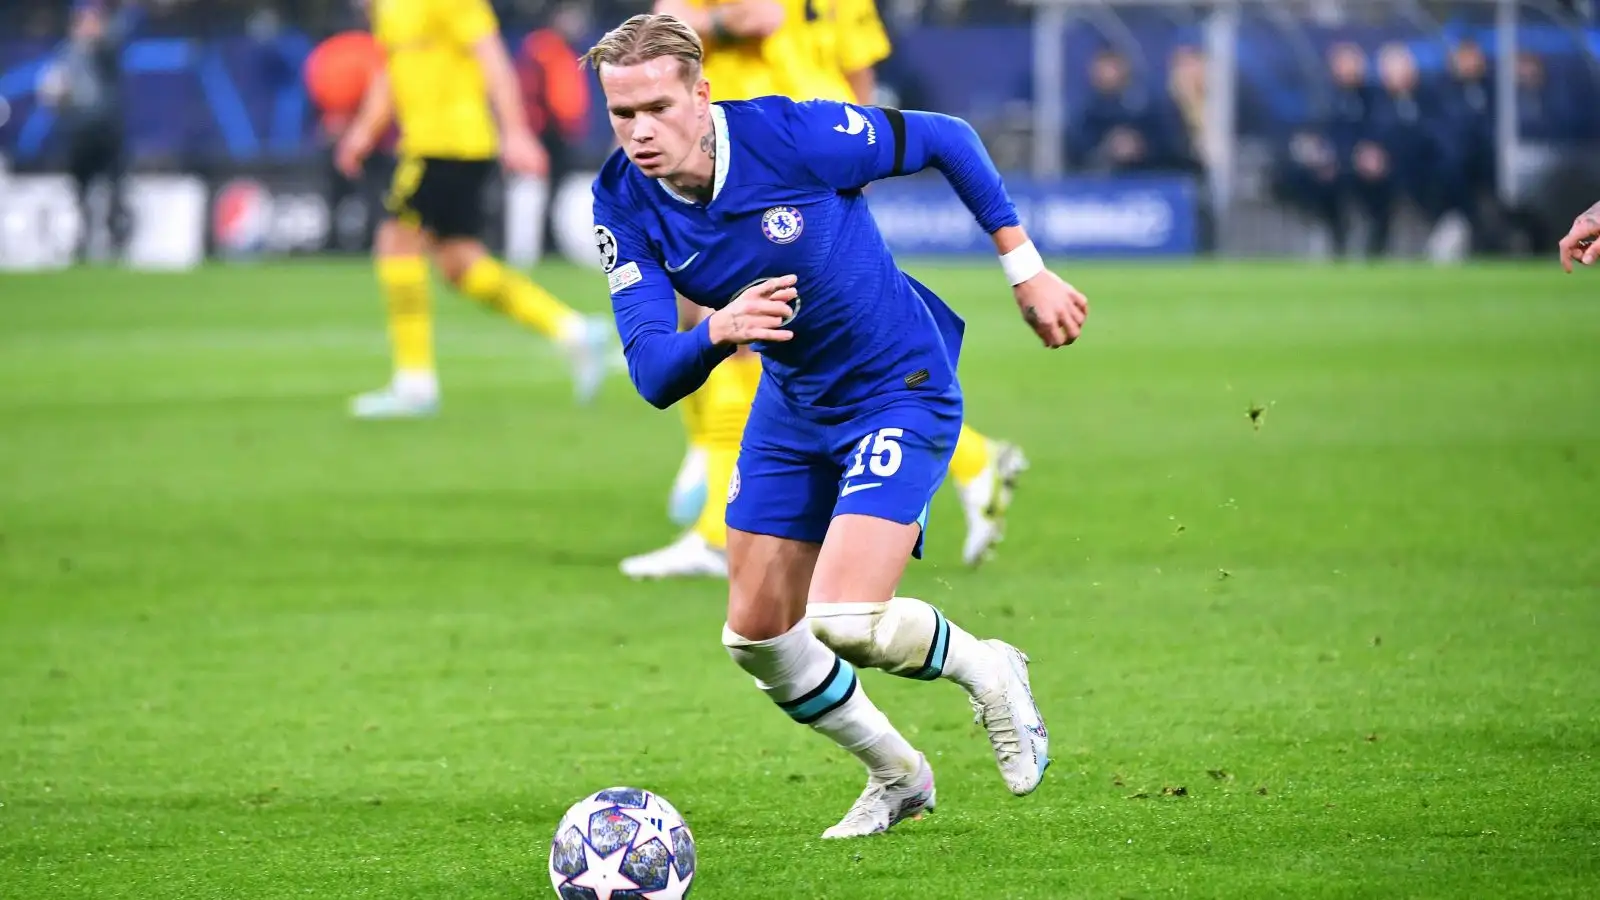 Chelsea winger Mykhailo Mudryk playing against Borussia Dortmund